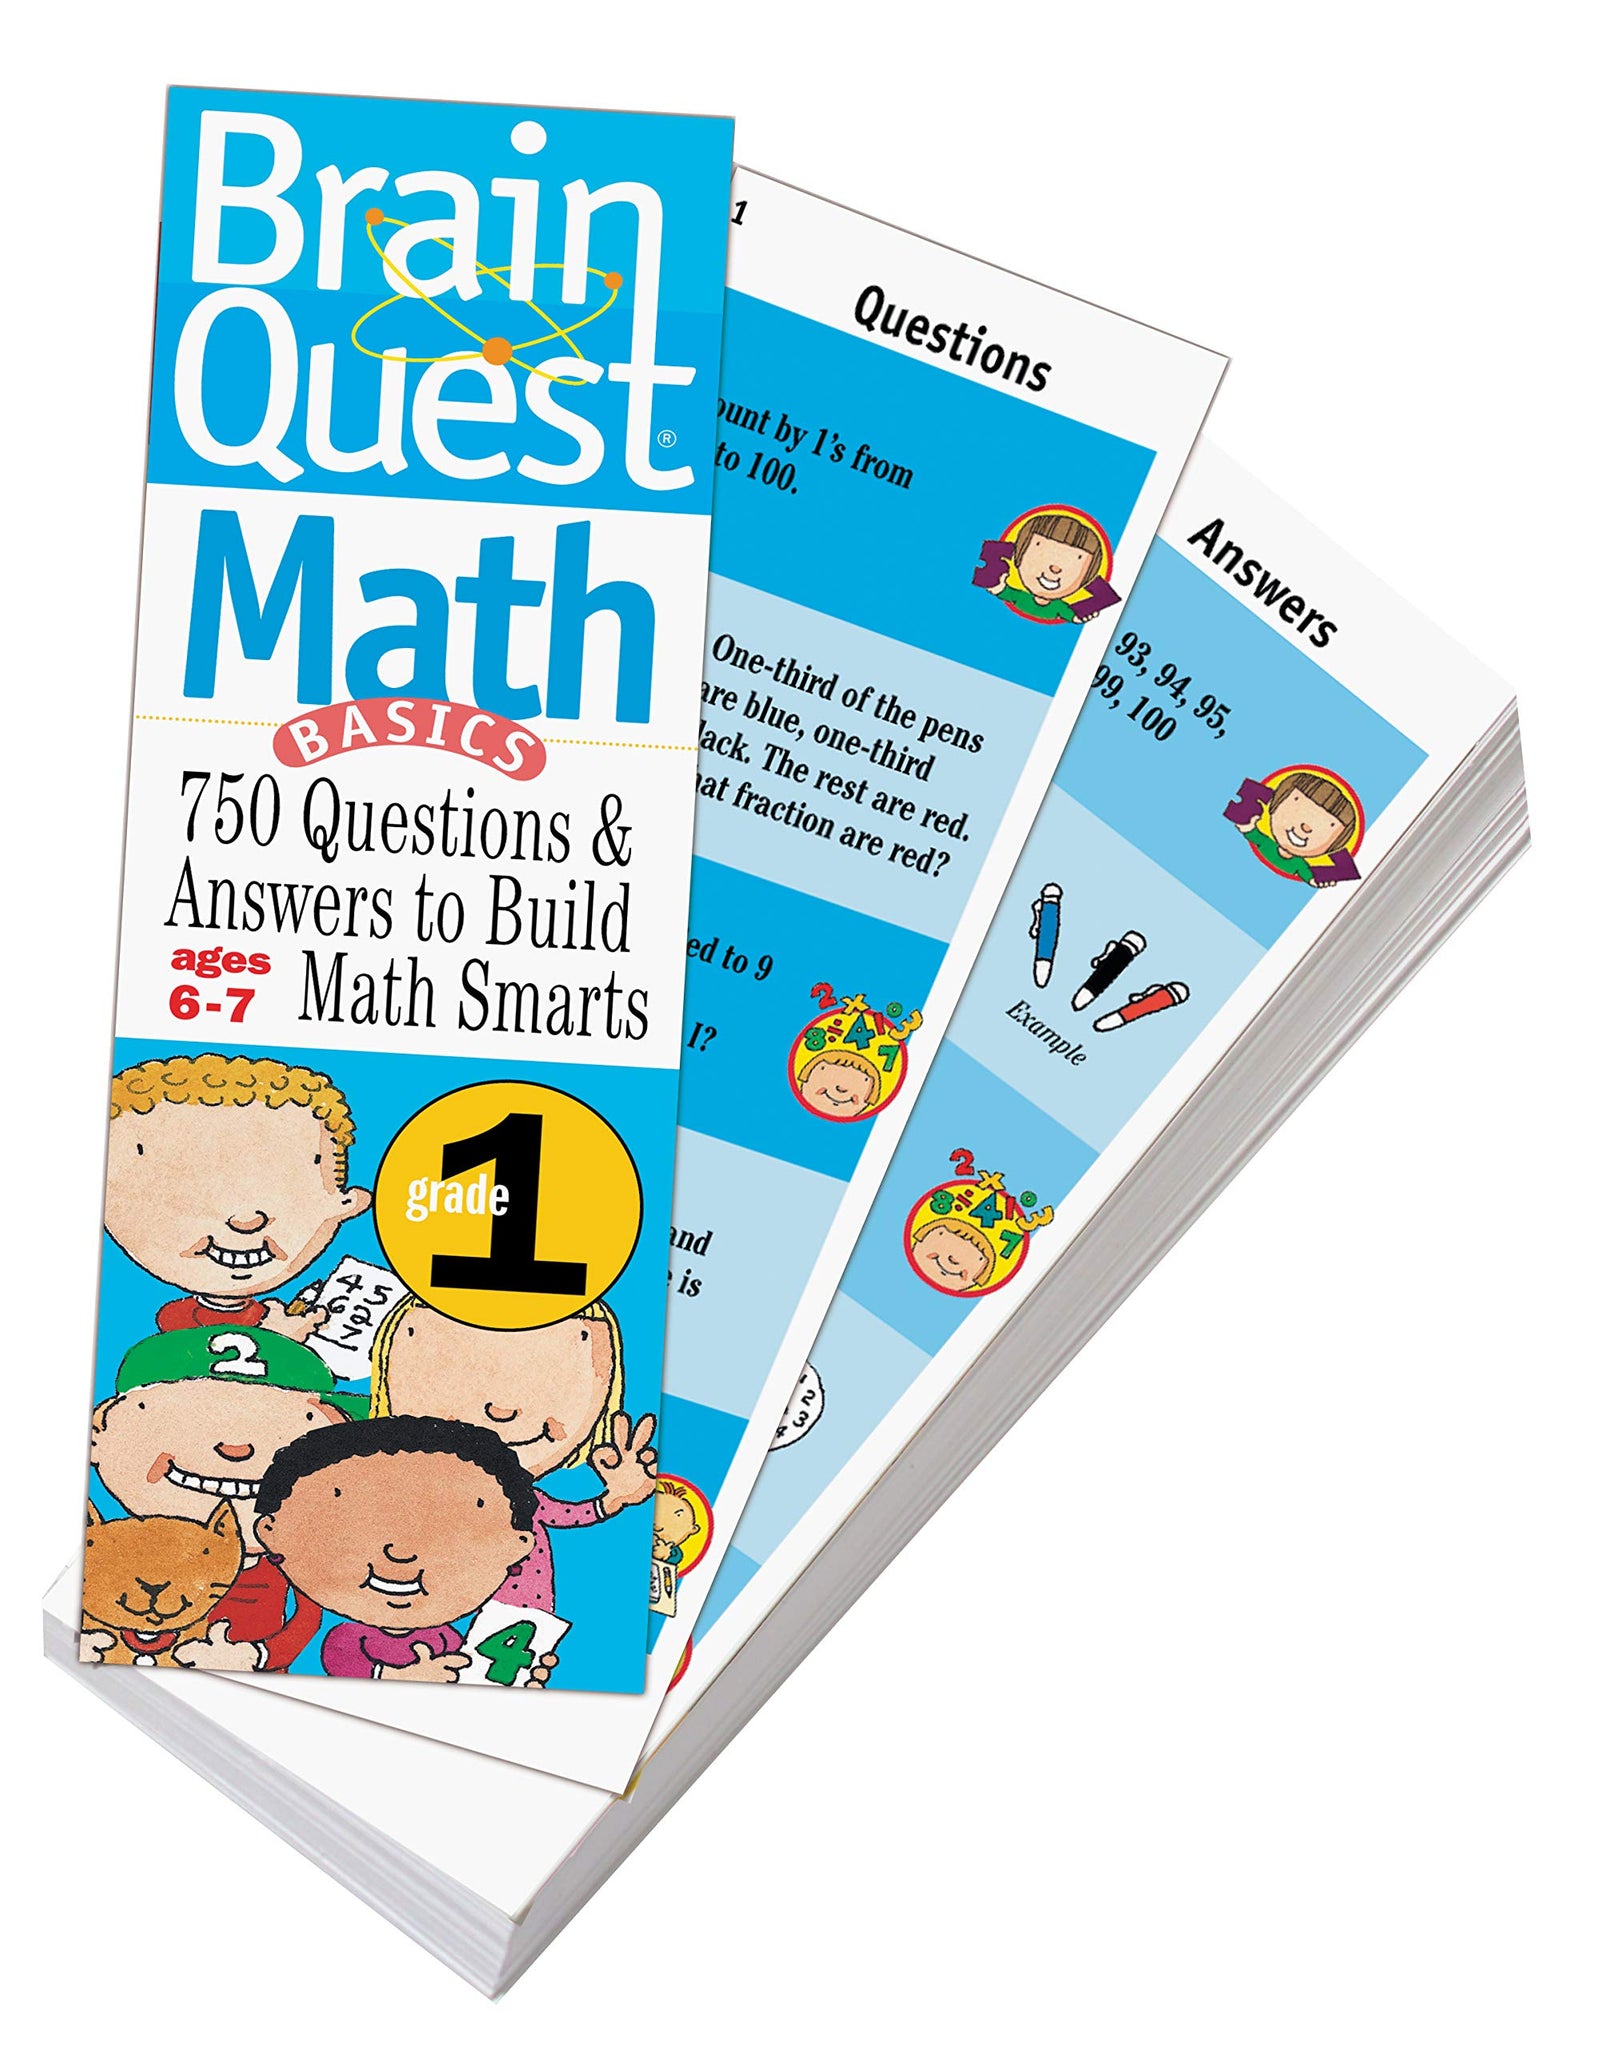 My First Grade Math Book: A Fun Educational Brain Game Book for